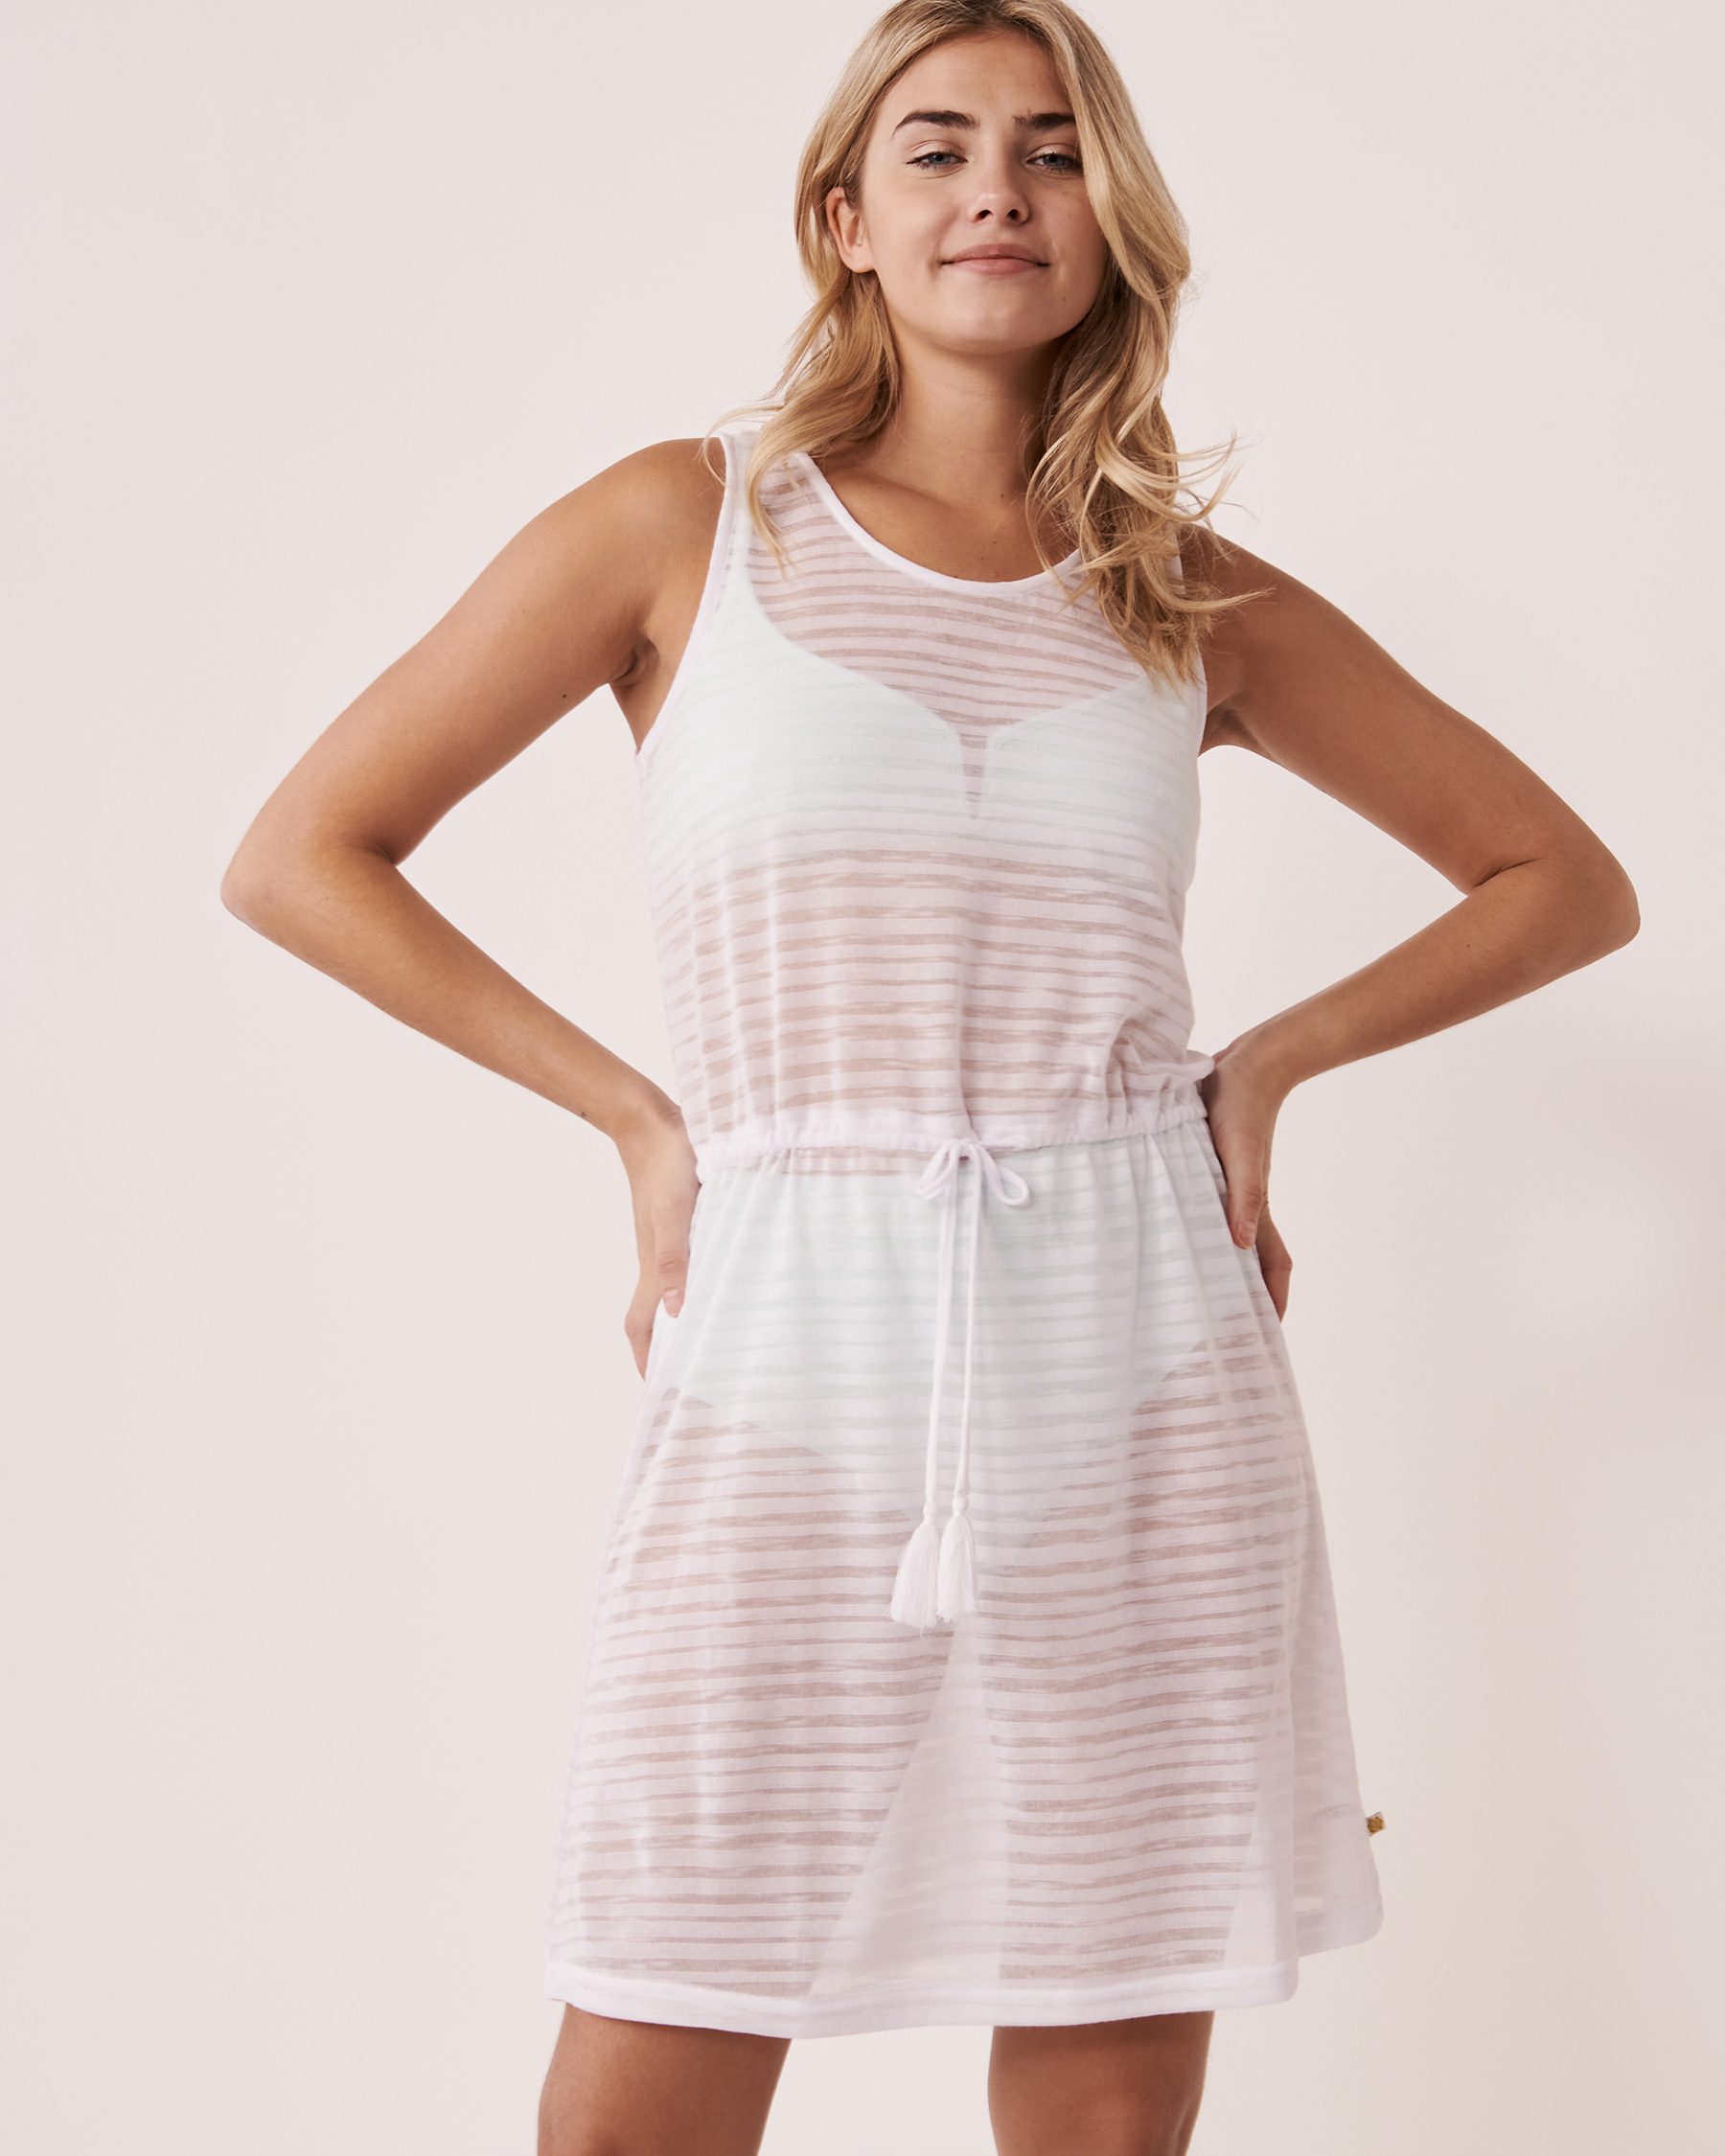 LA VIE EN ROSE AQUA Recycled Fibers Sleeveless Short Dress White 80300041 - View1